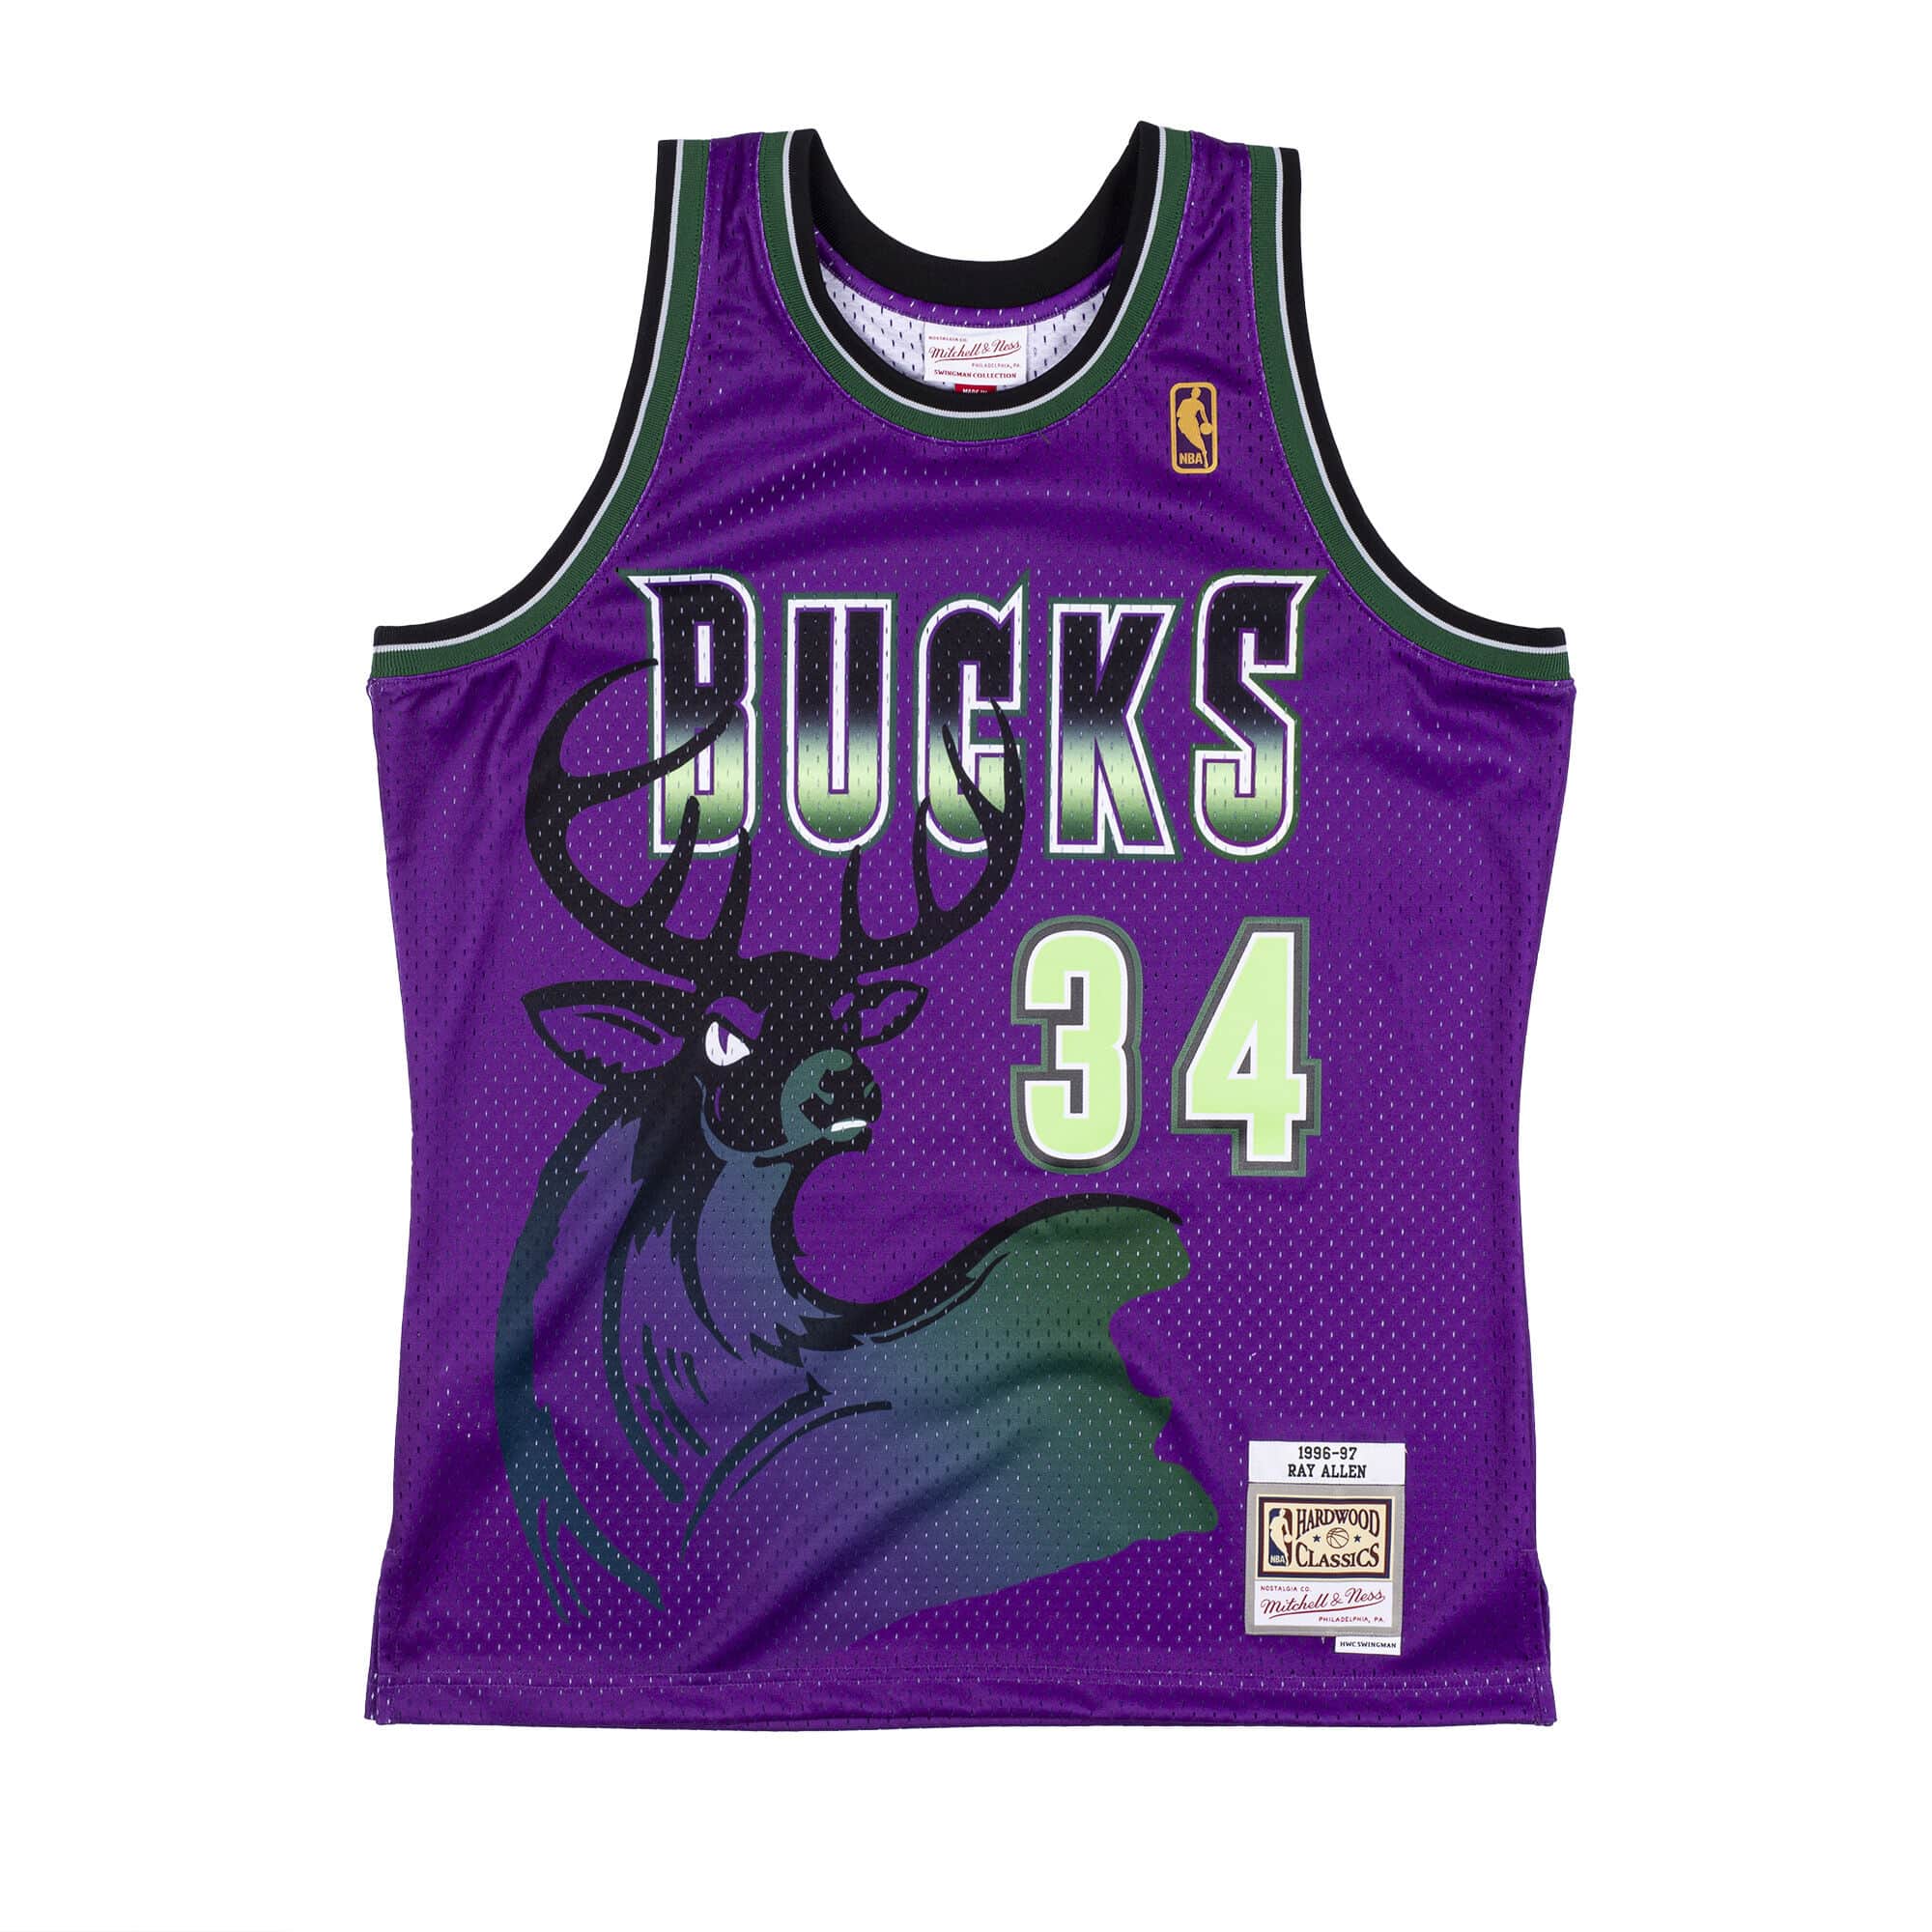 The Milwaukee Bucks are bringing back purple jerseys as their